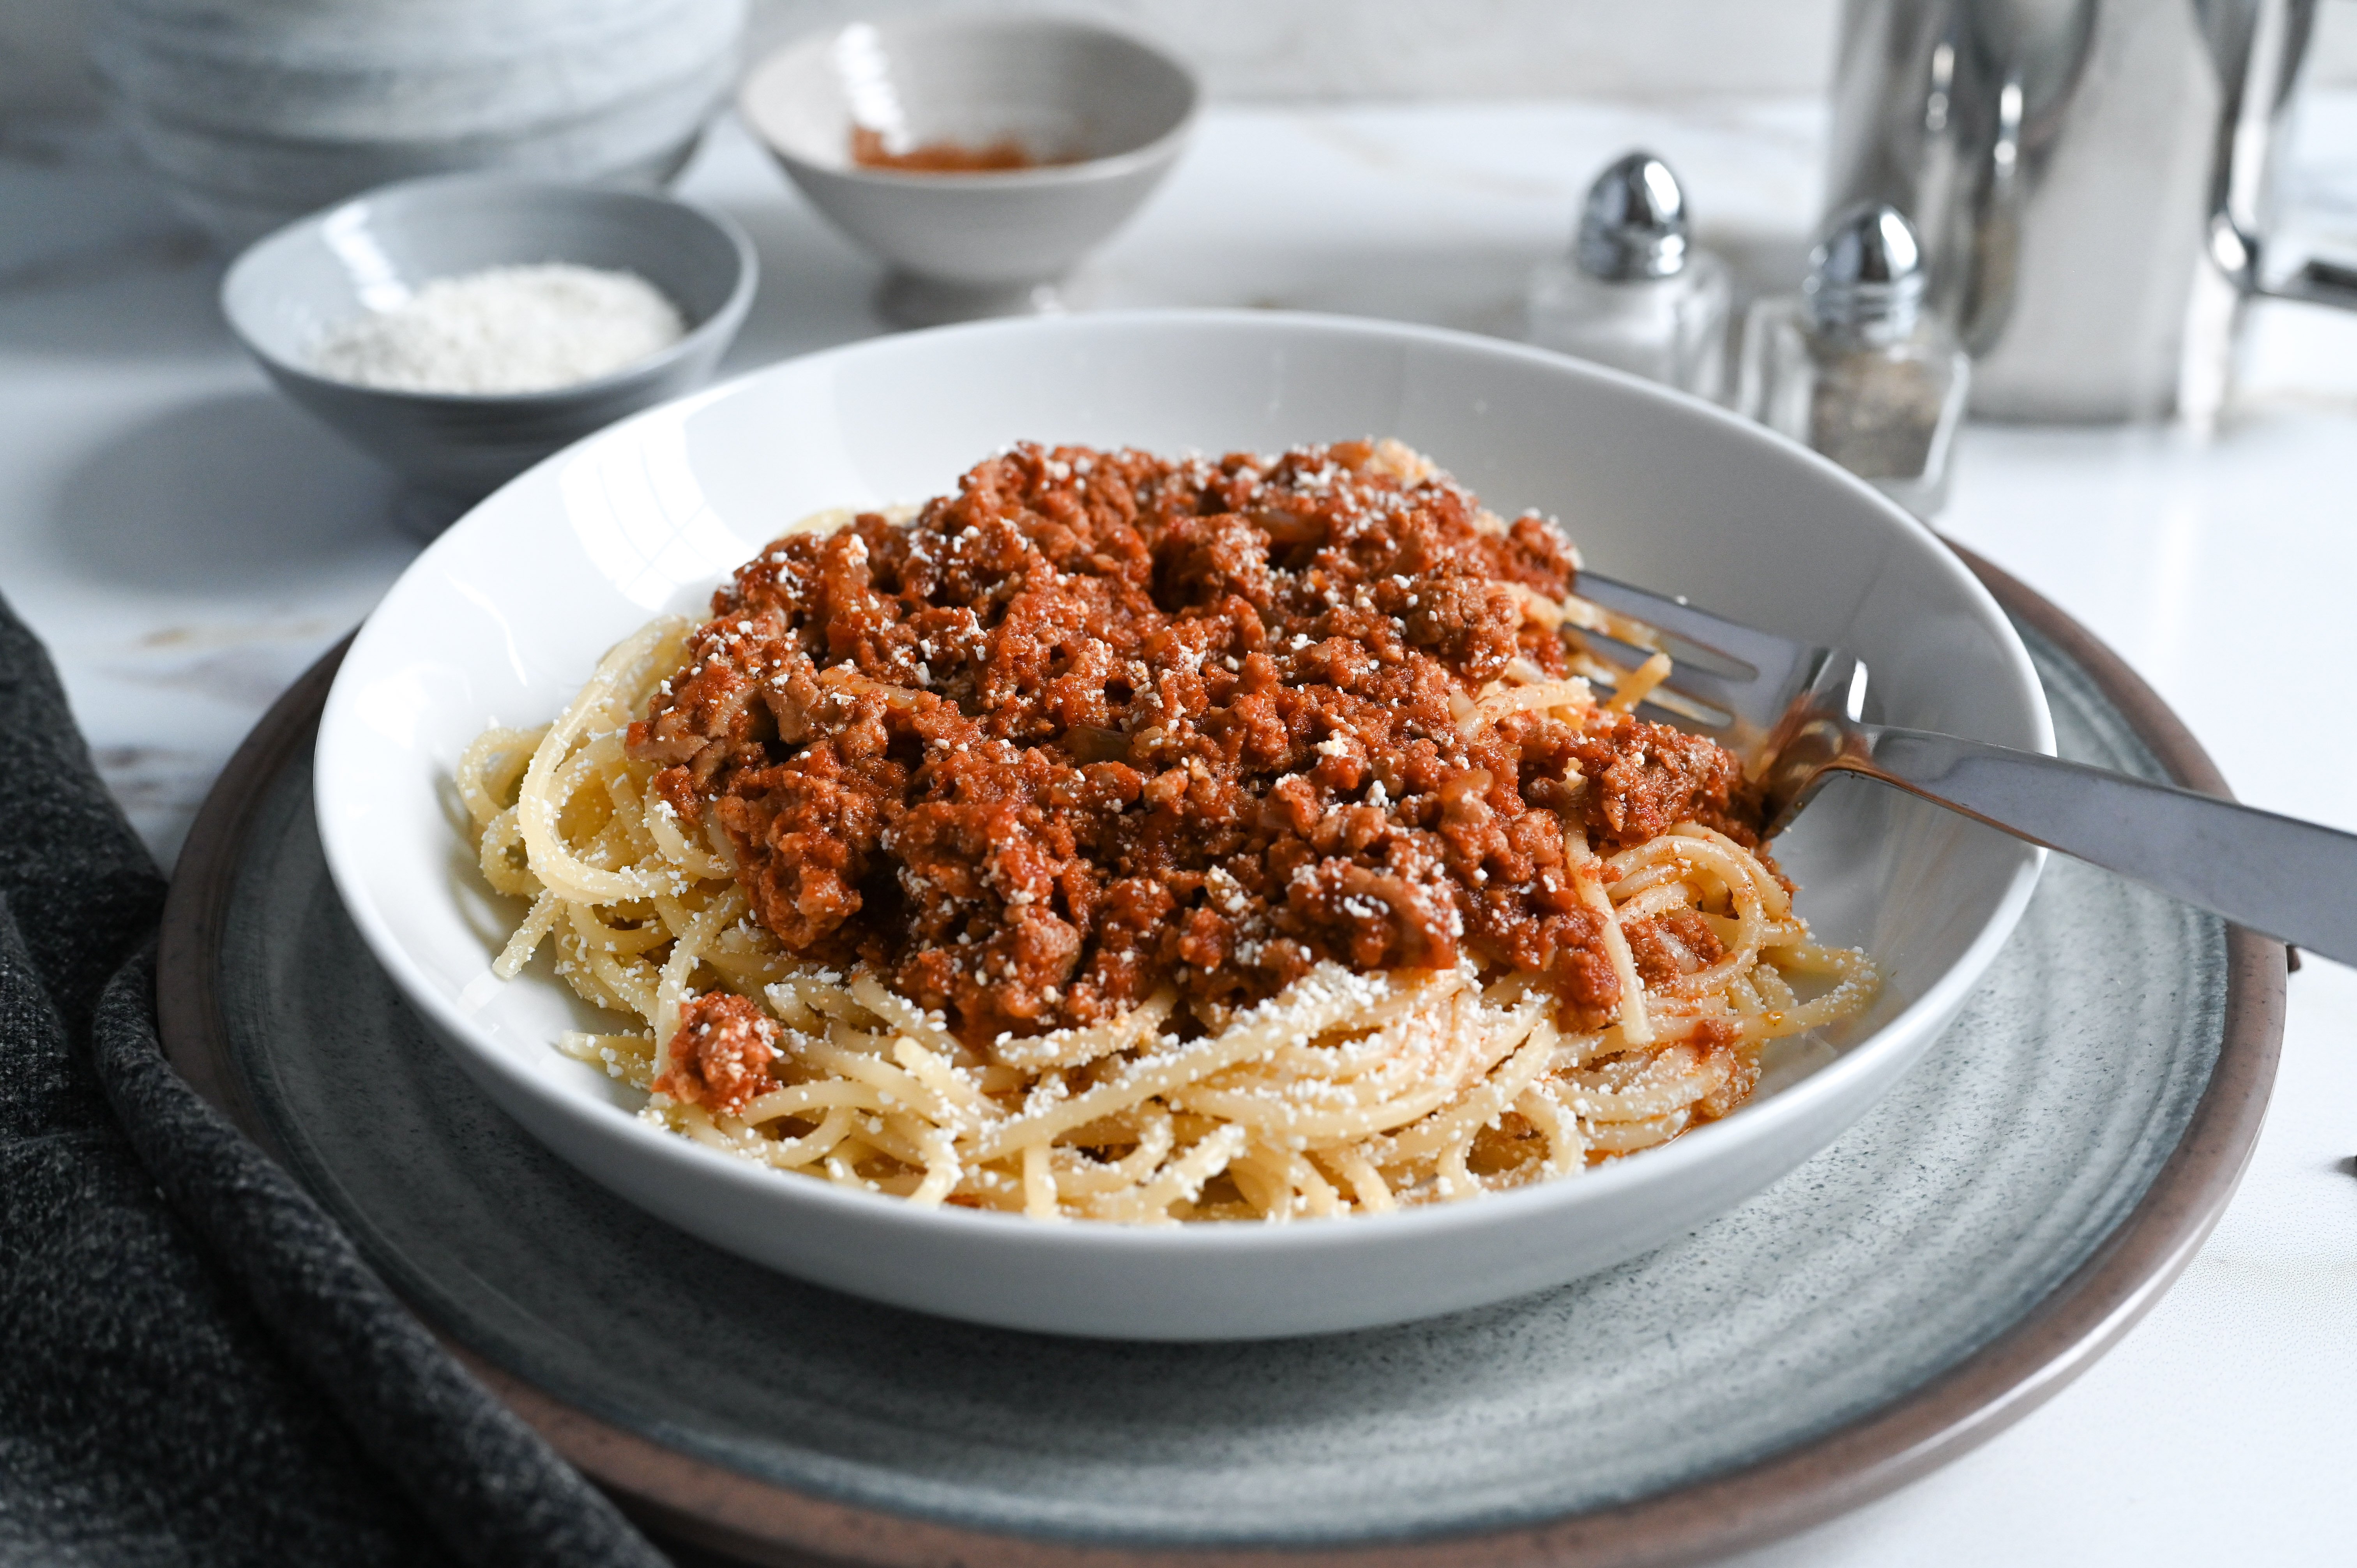 Spaghetti with meat sauce (Μακαρόνια με κιμά)